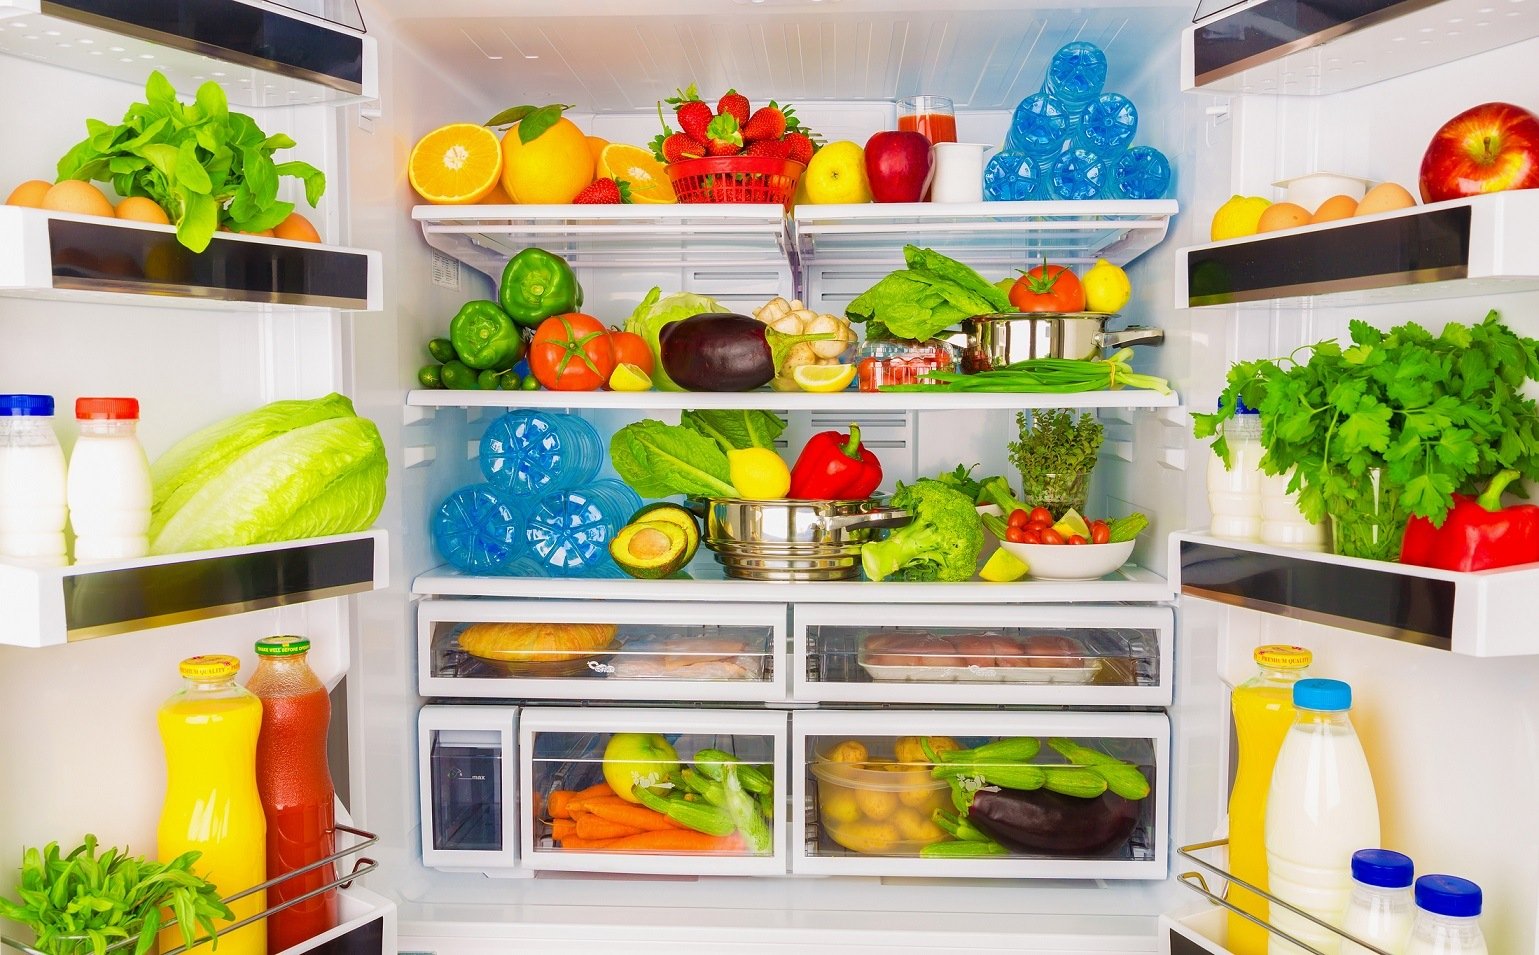 Full fridge with fruit and veggies